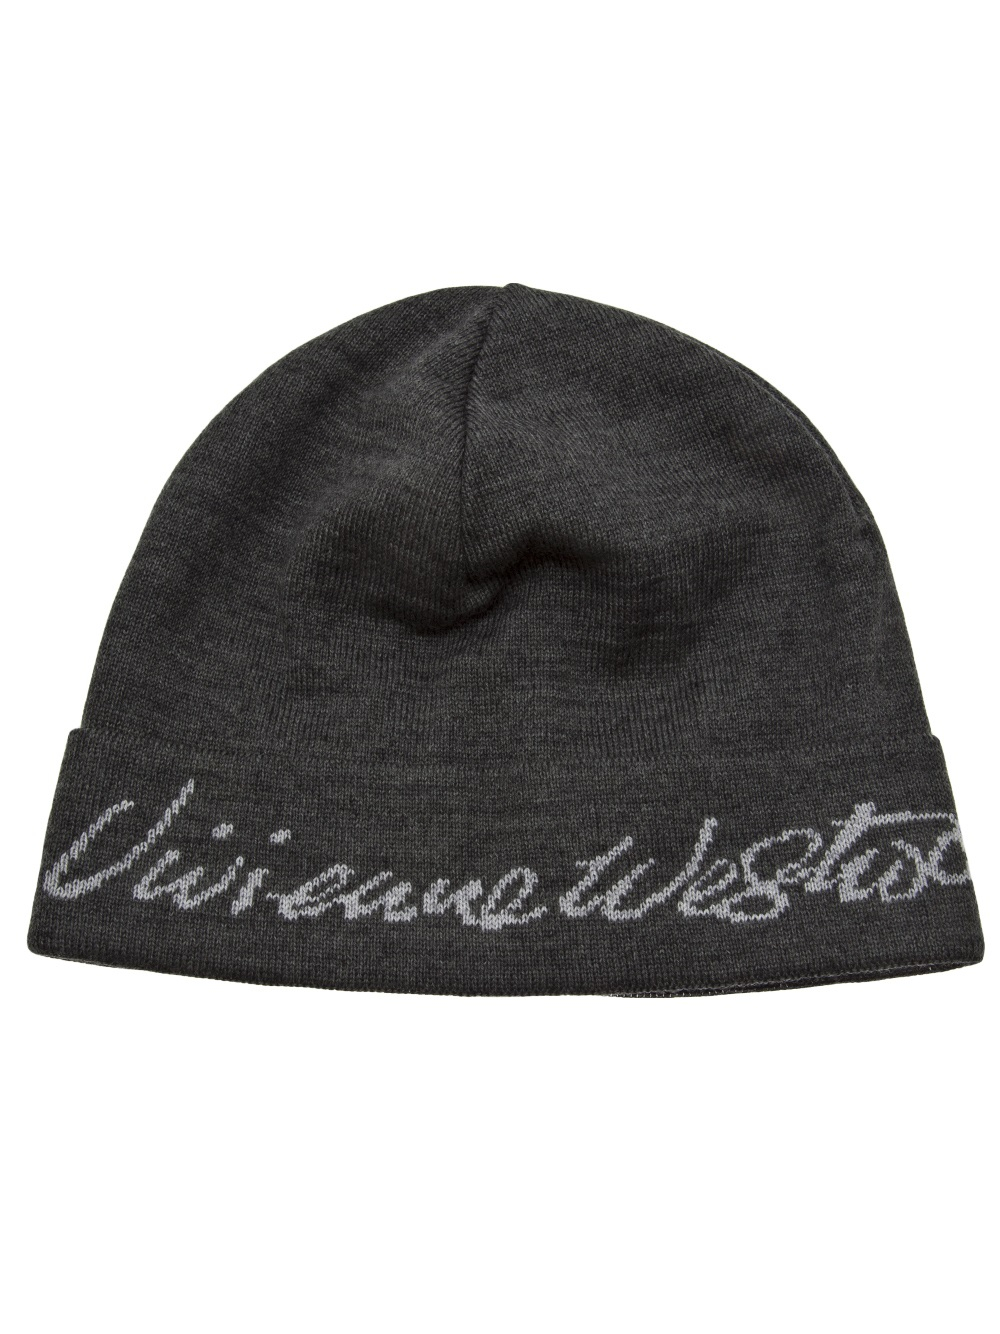 Vivienne westwood Vivienne Westwood Signature Hat in Gray for Men | Lyst